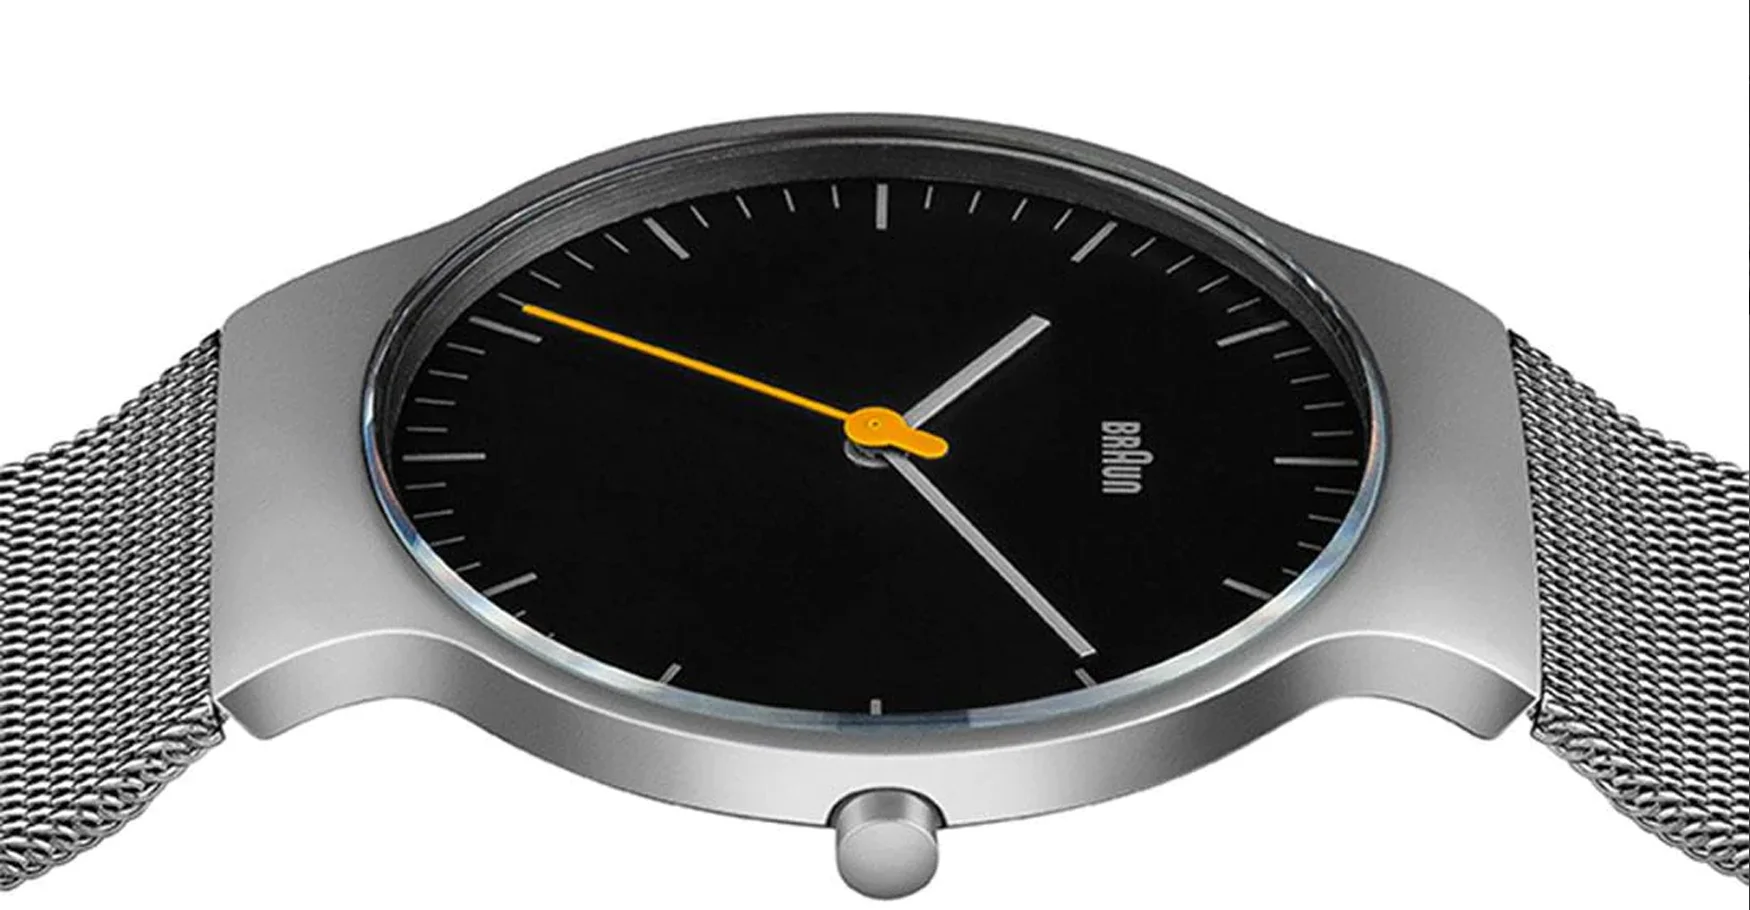 Braun Gents BN0211 Classic Slim Watch - Black Dial and Silver Mesh Bracelet